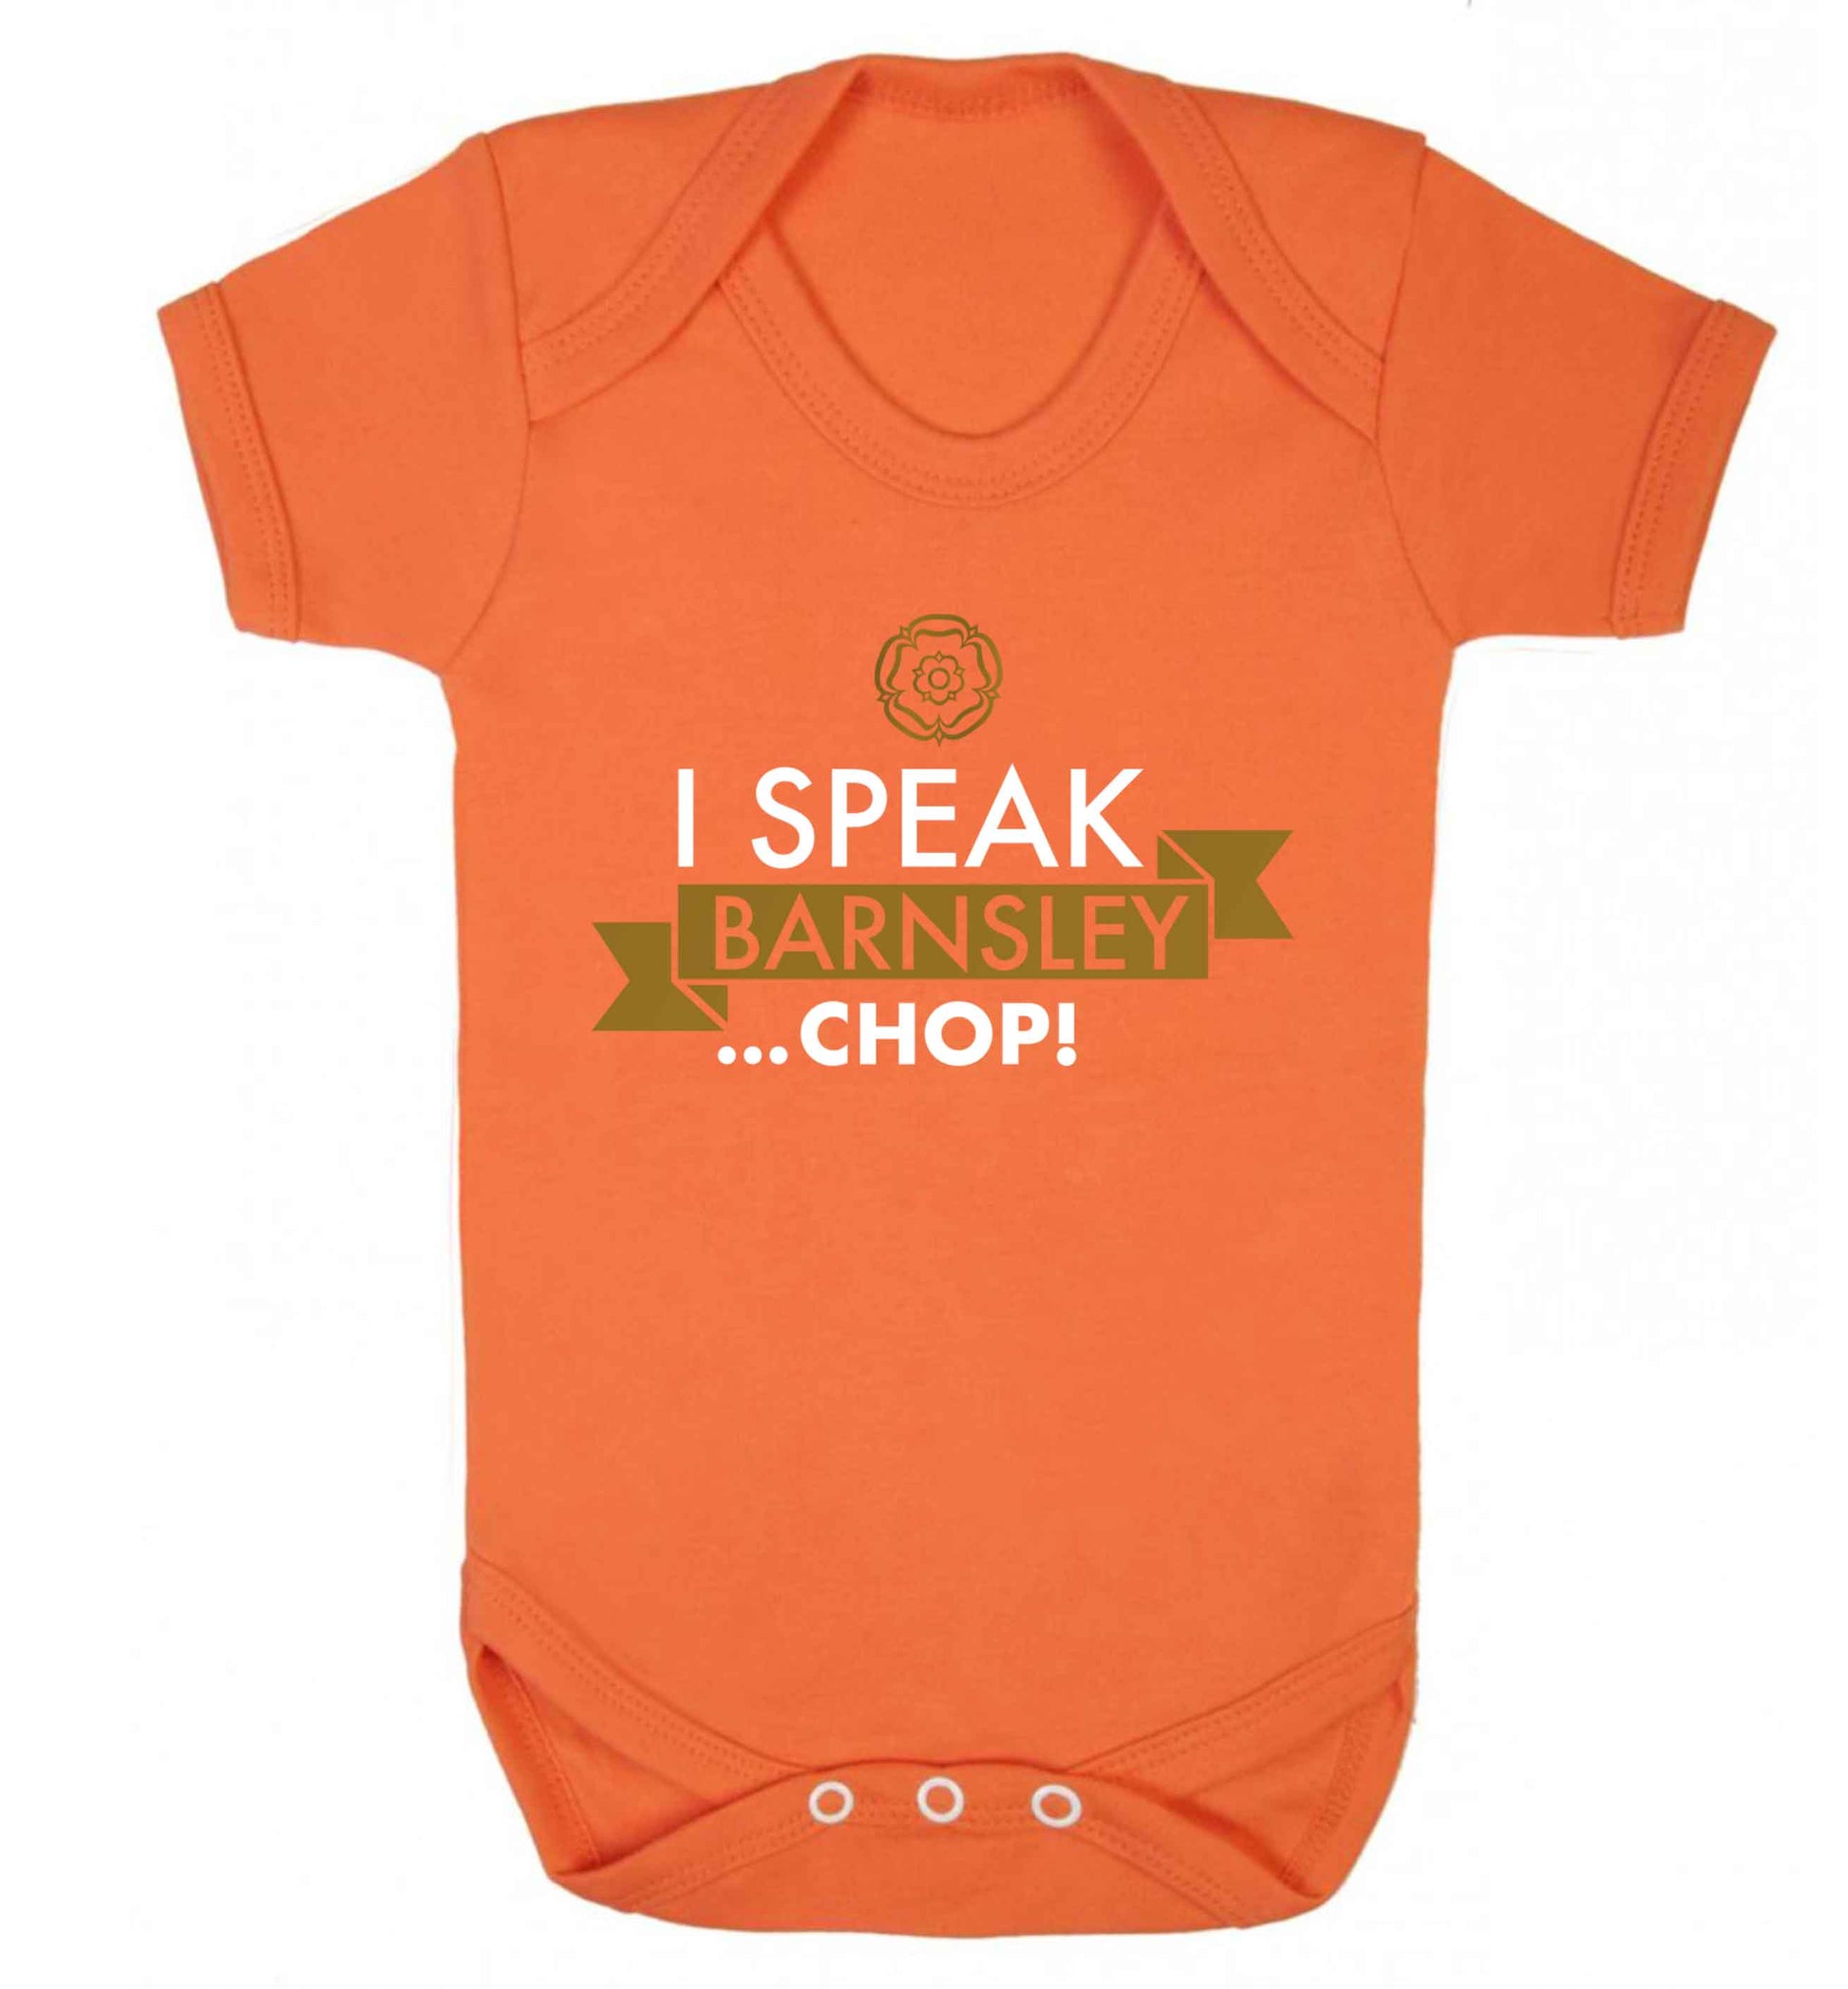 I speak Barnsley...chop! Baby Vest orange 18-24 months